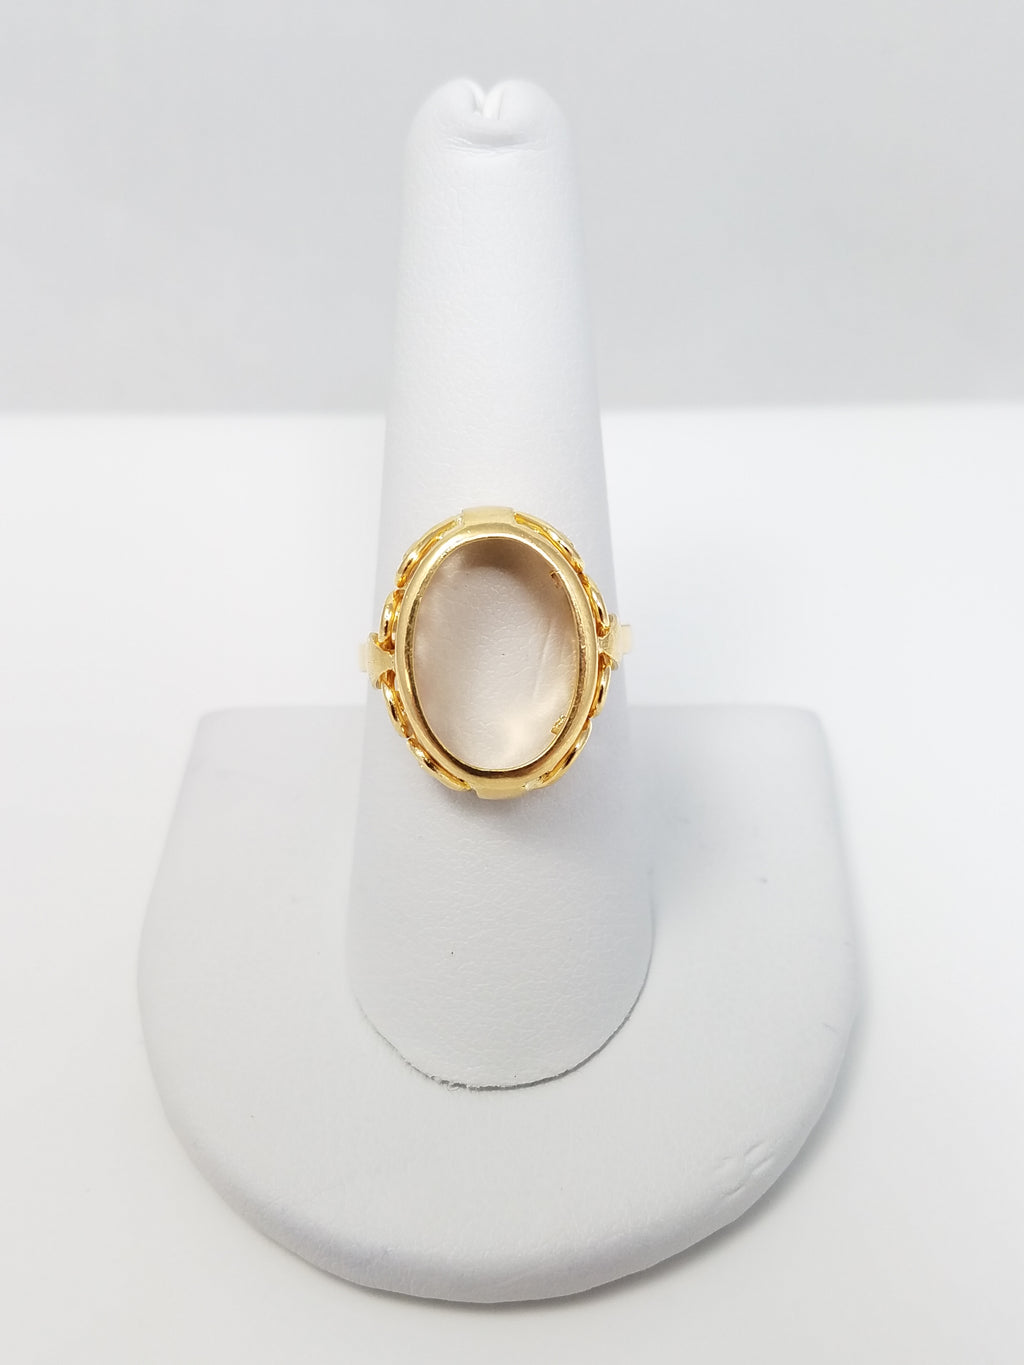 Decorative Vintage 18k Yellow Gold Ornate Ring Mount